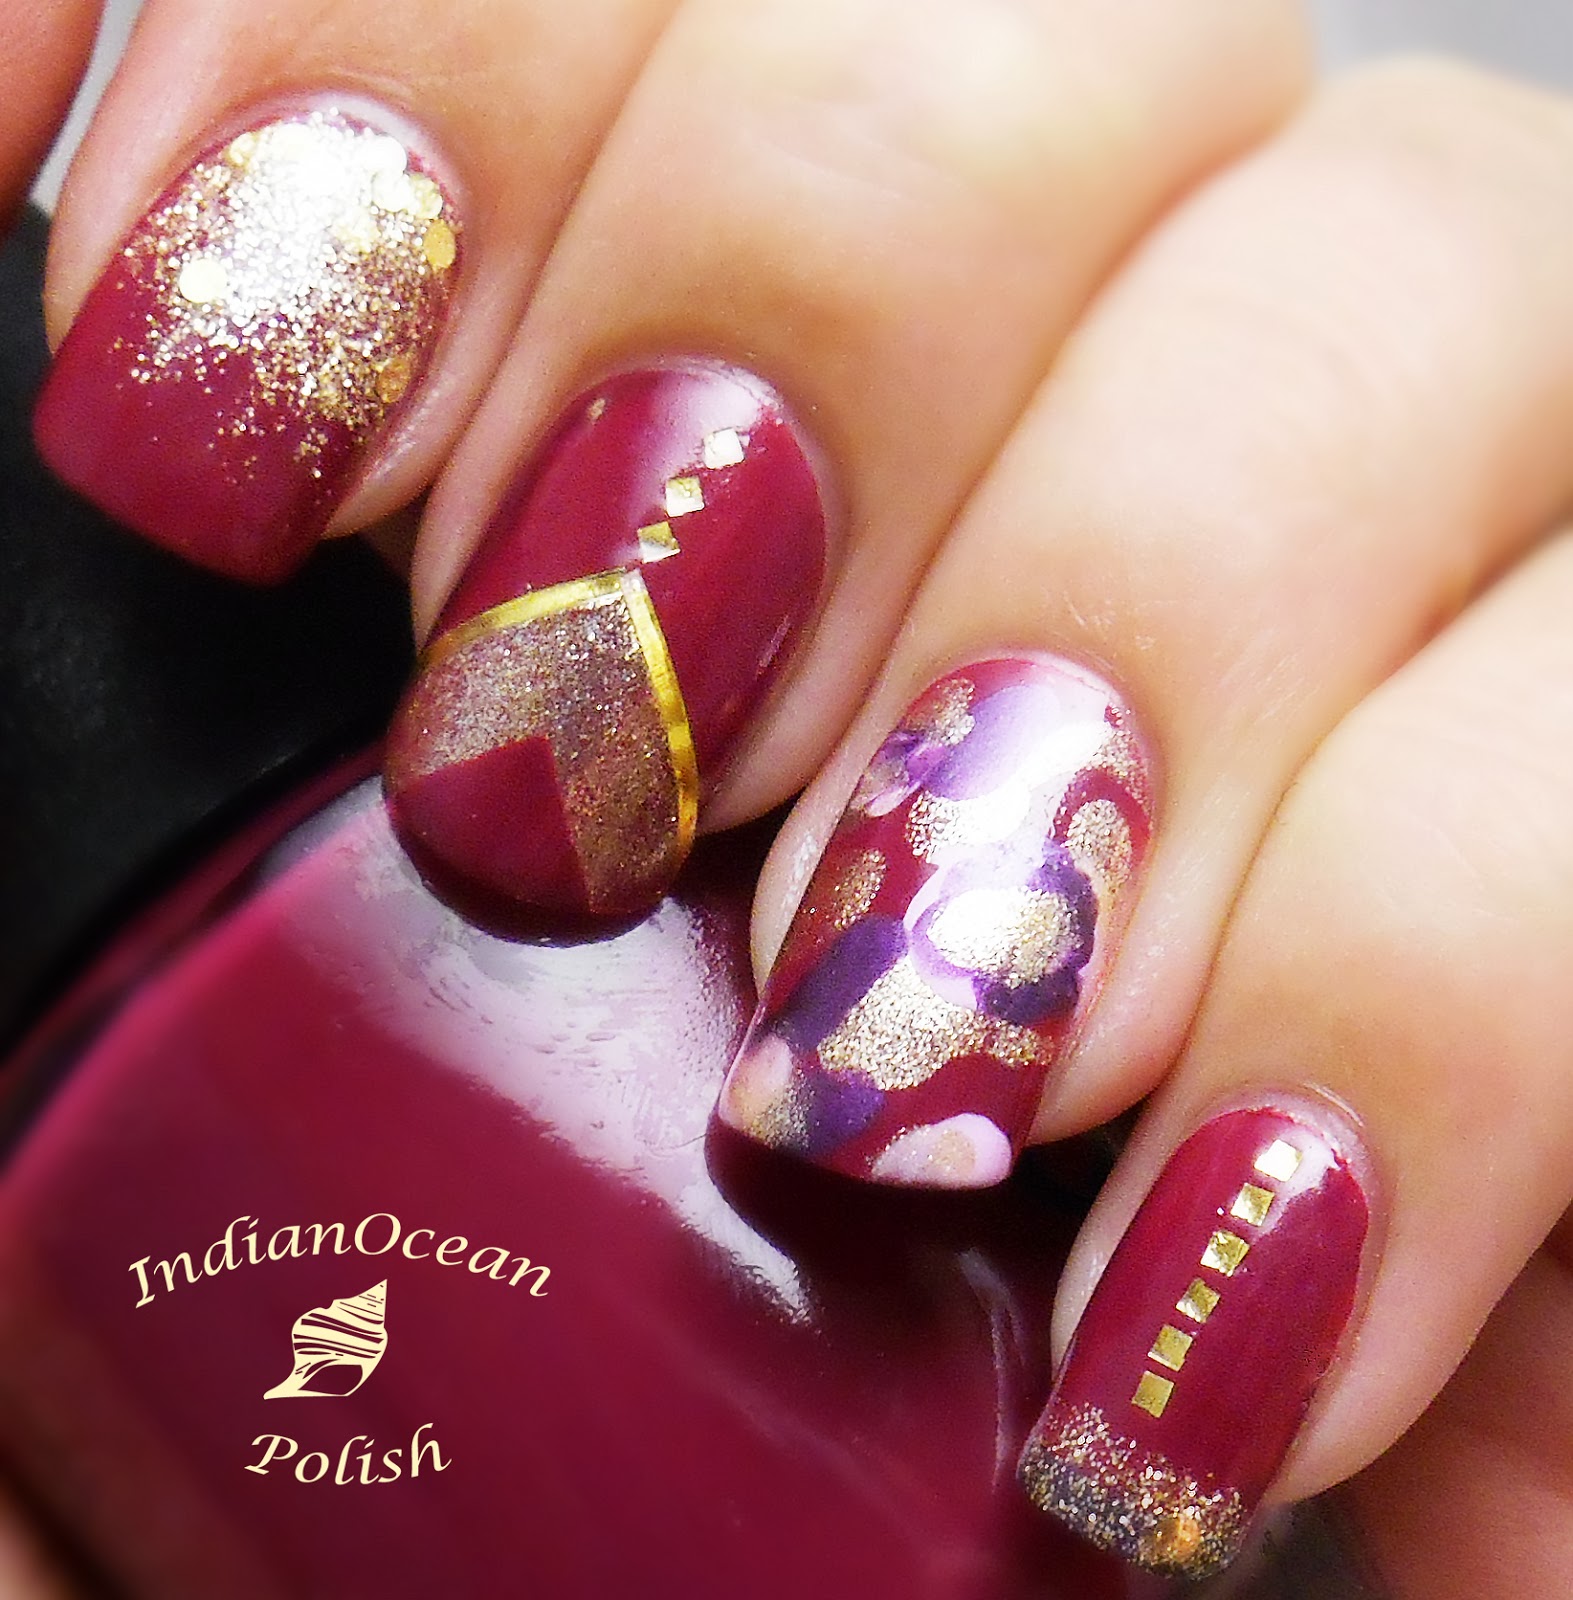 Indian Ocean Polish: Purple and Gold 'Skittles' Nail Art